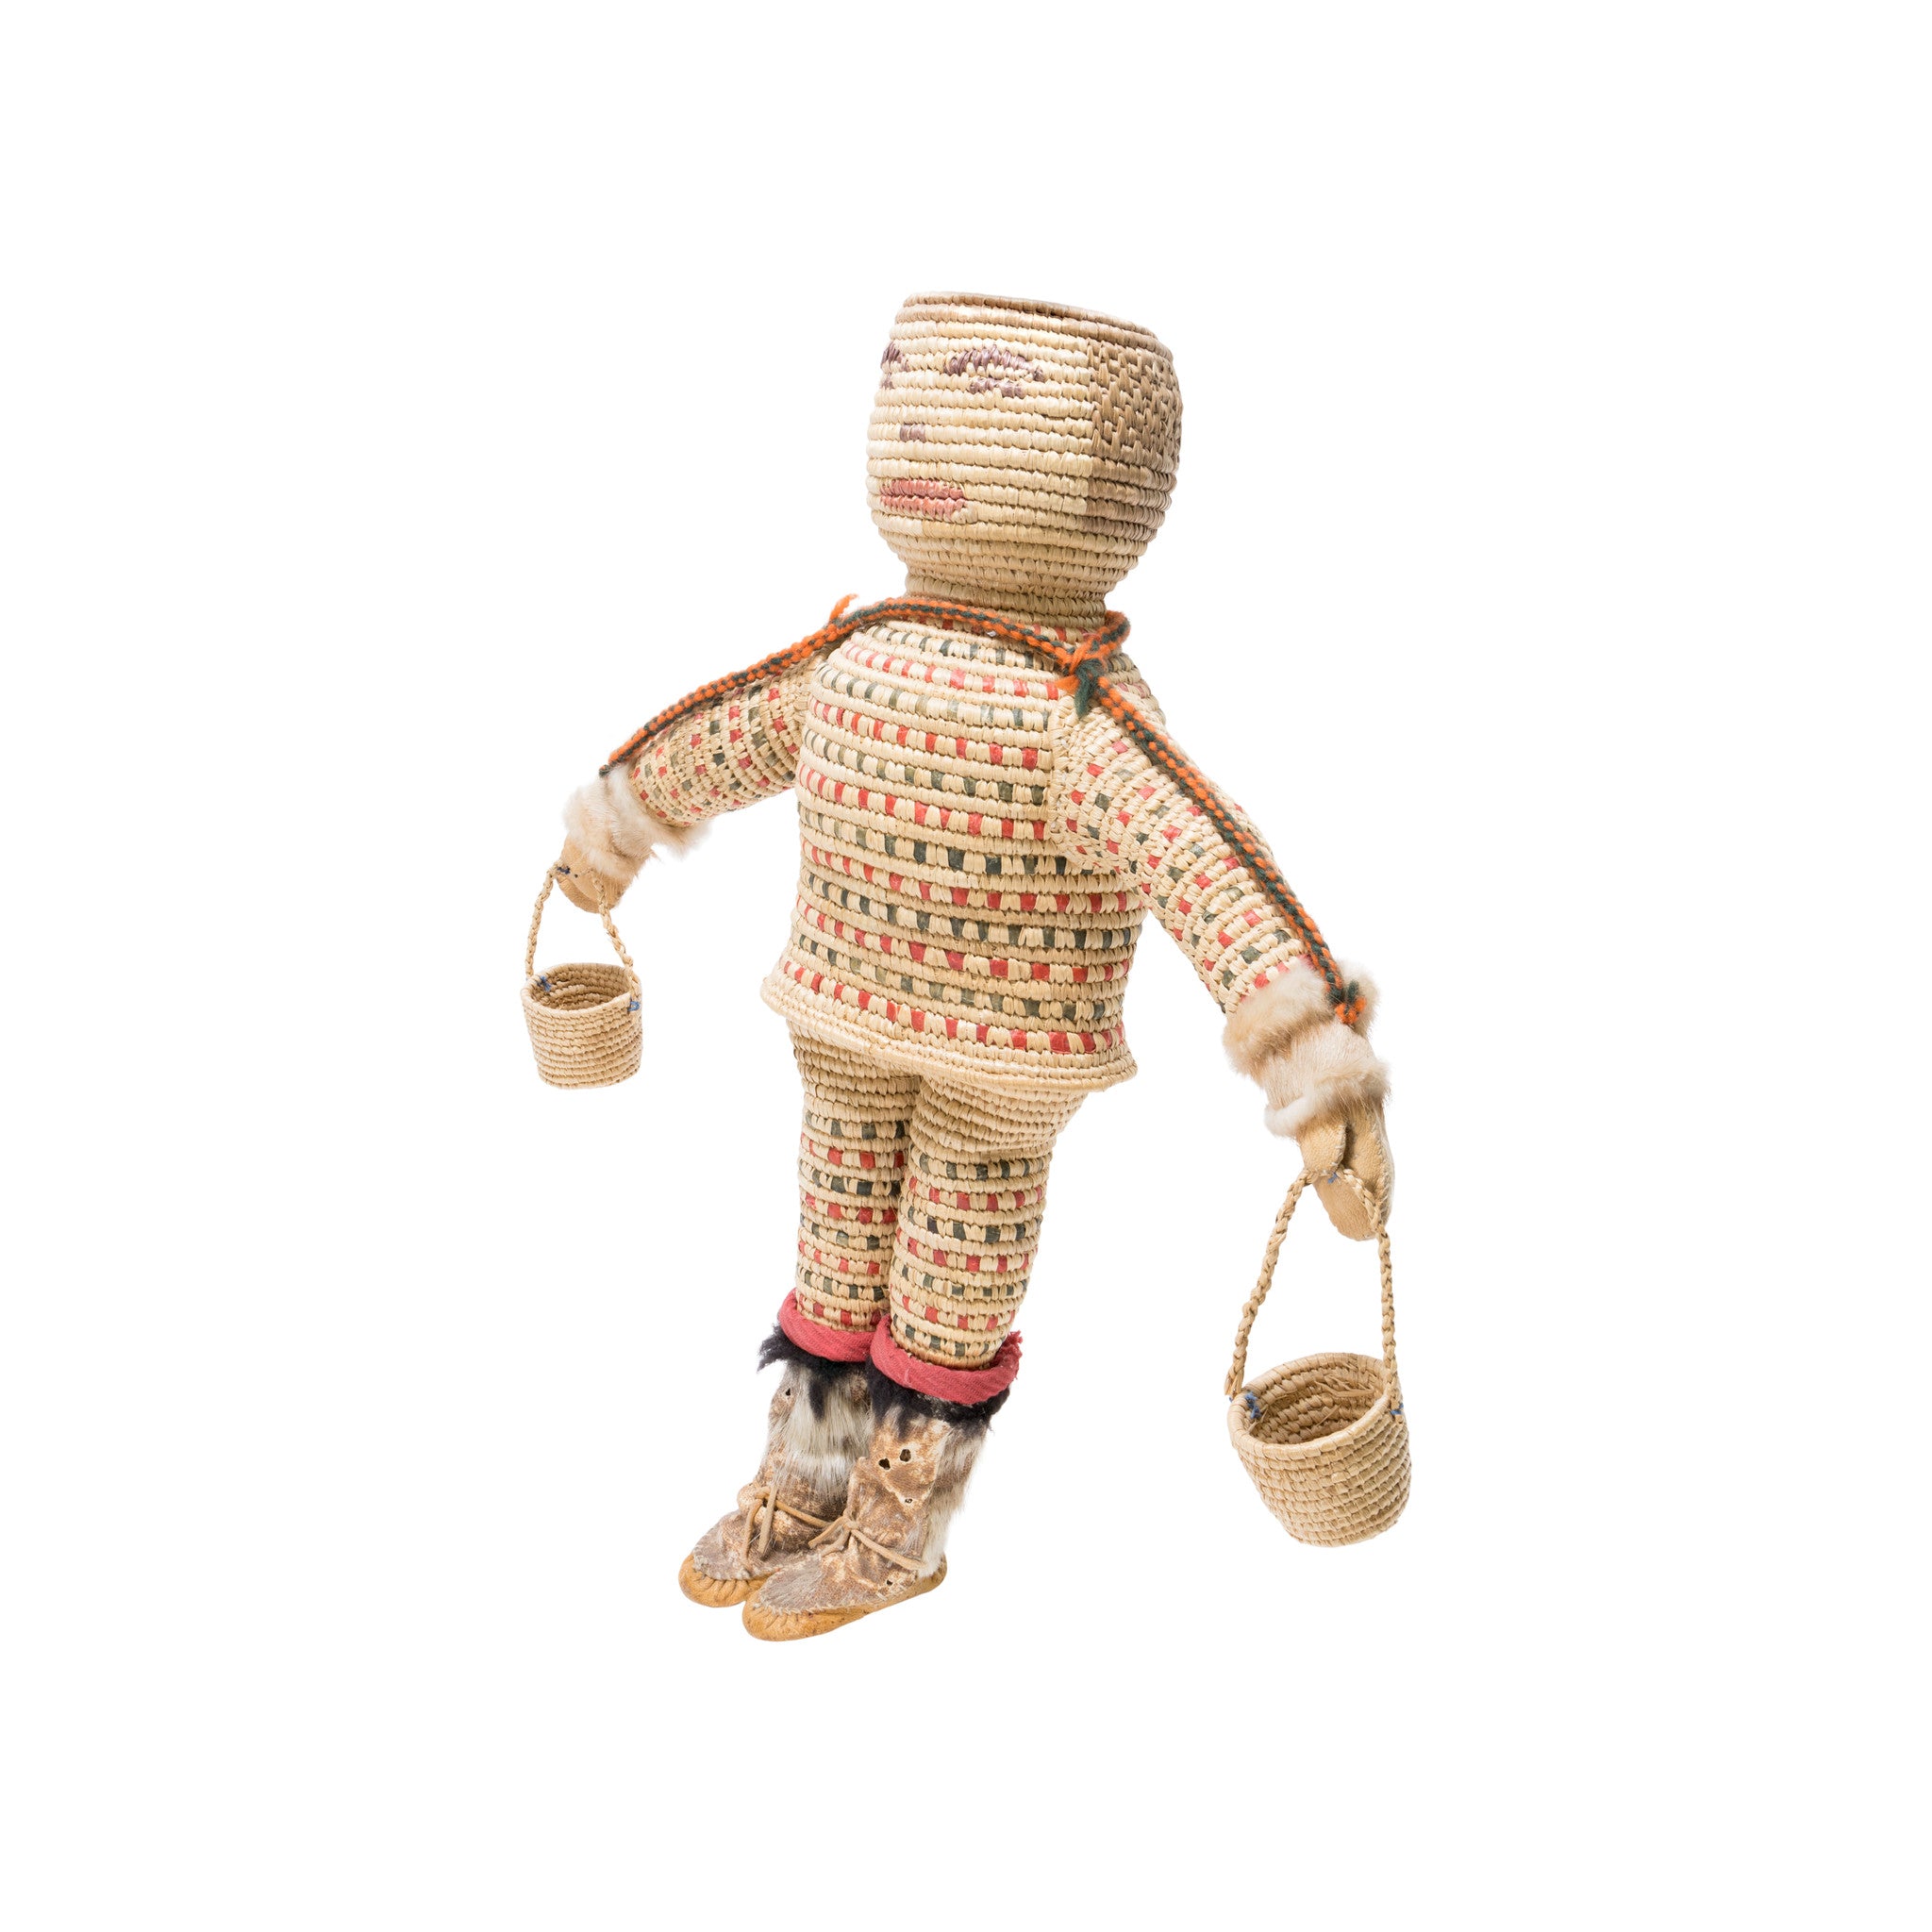 Alaskan Basketry Doll